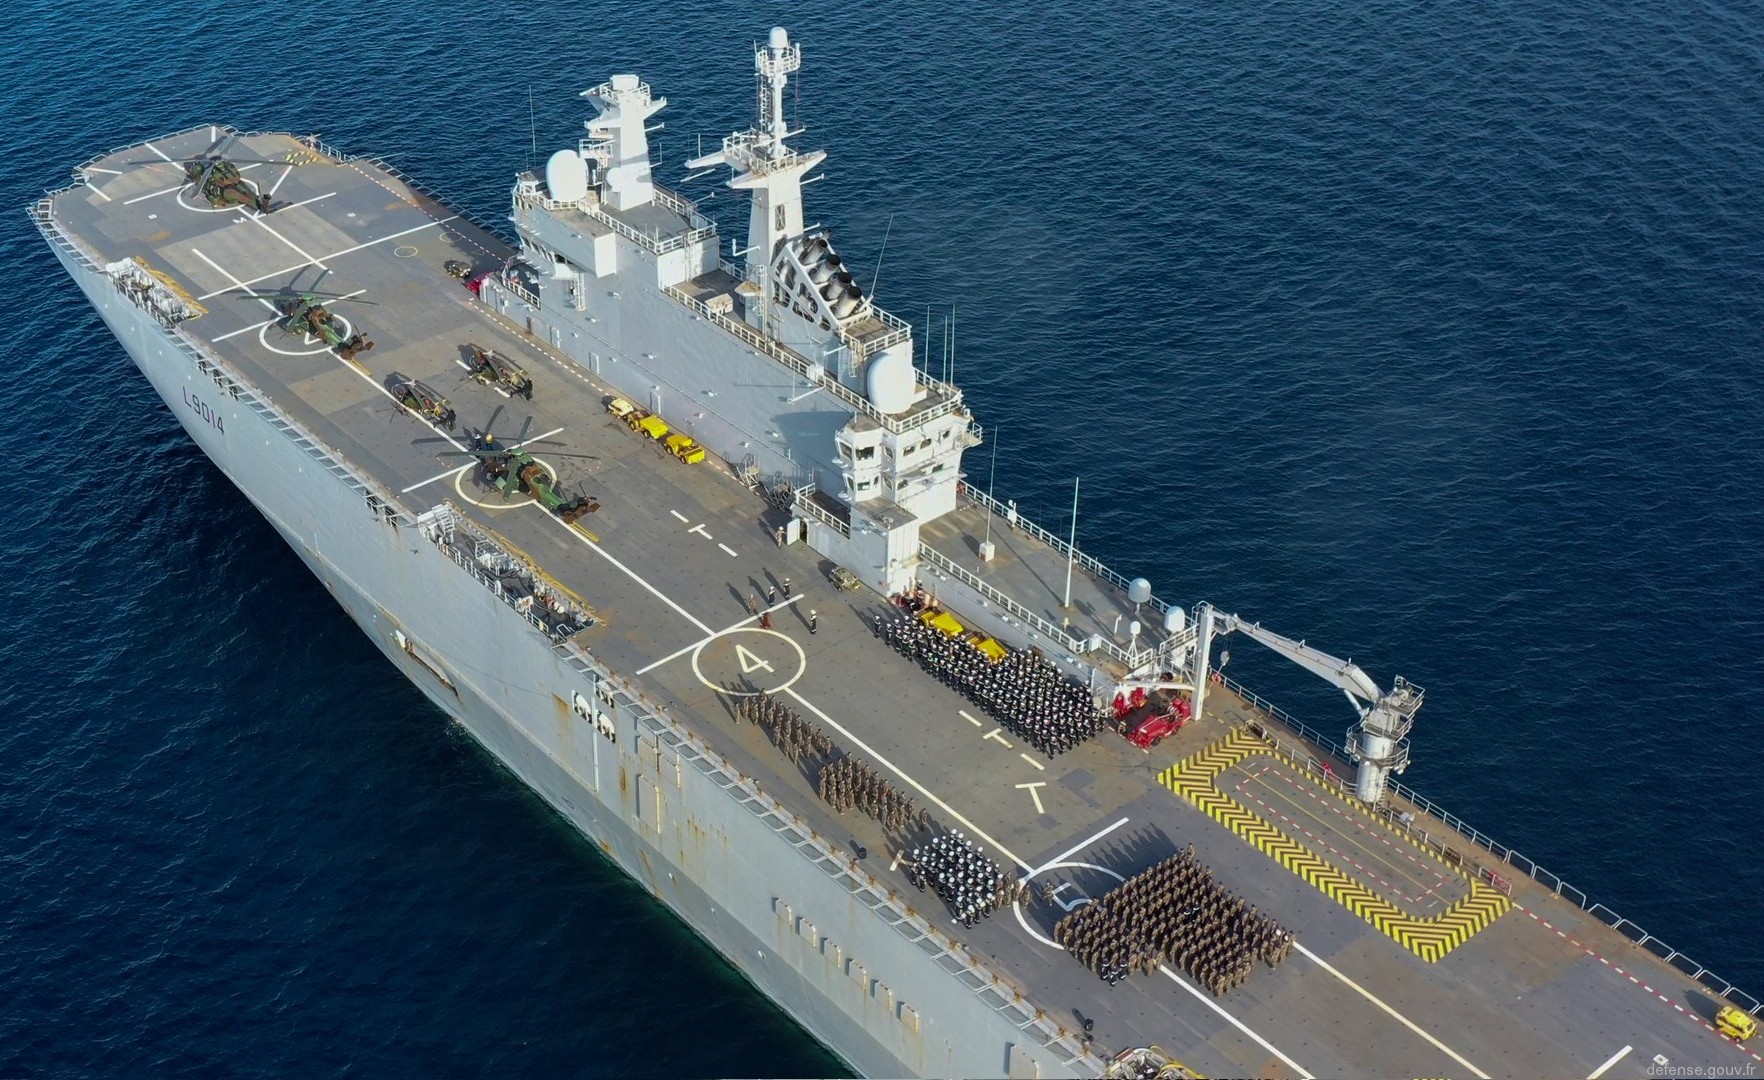 l-9014 fs tonnere mistral class amphibious assault command ship bpc french navy marine nationale 34